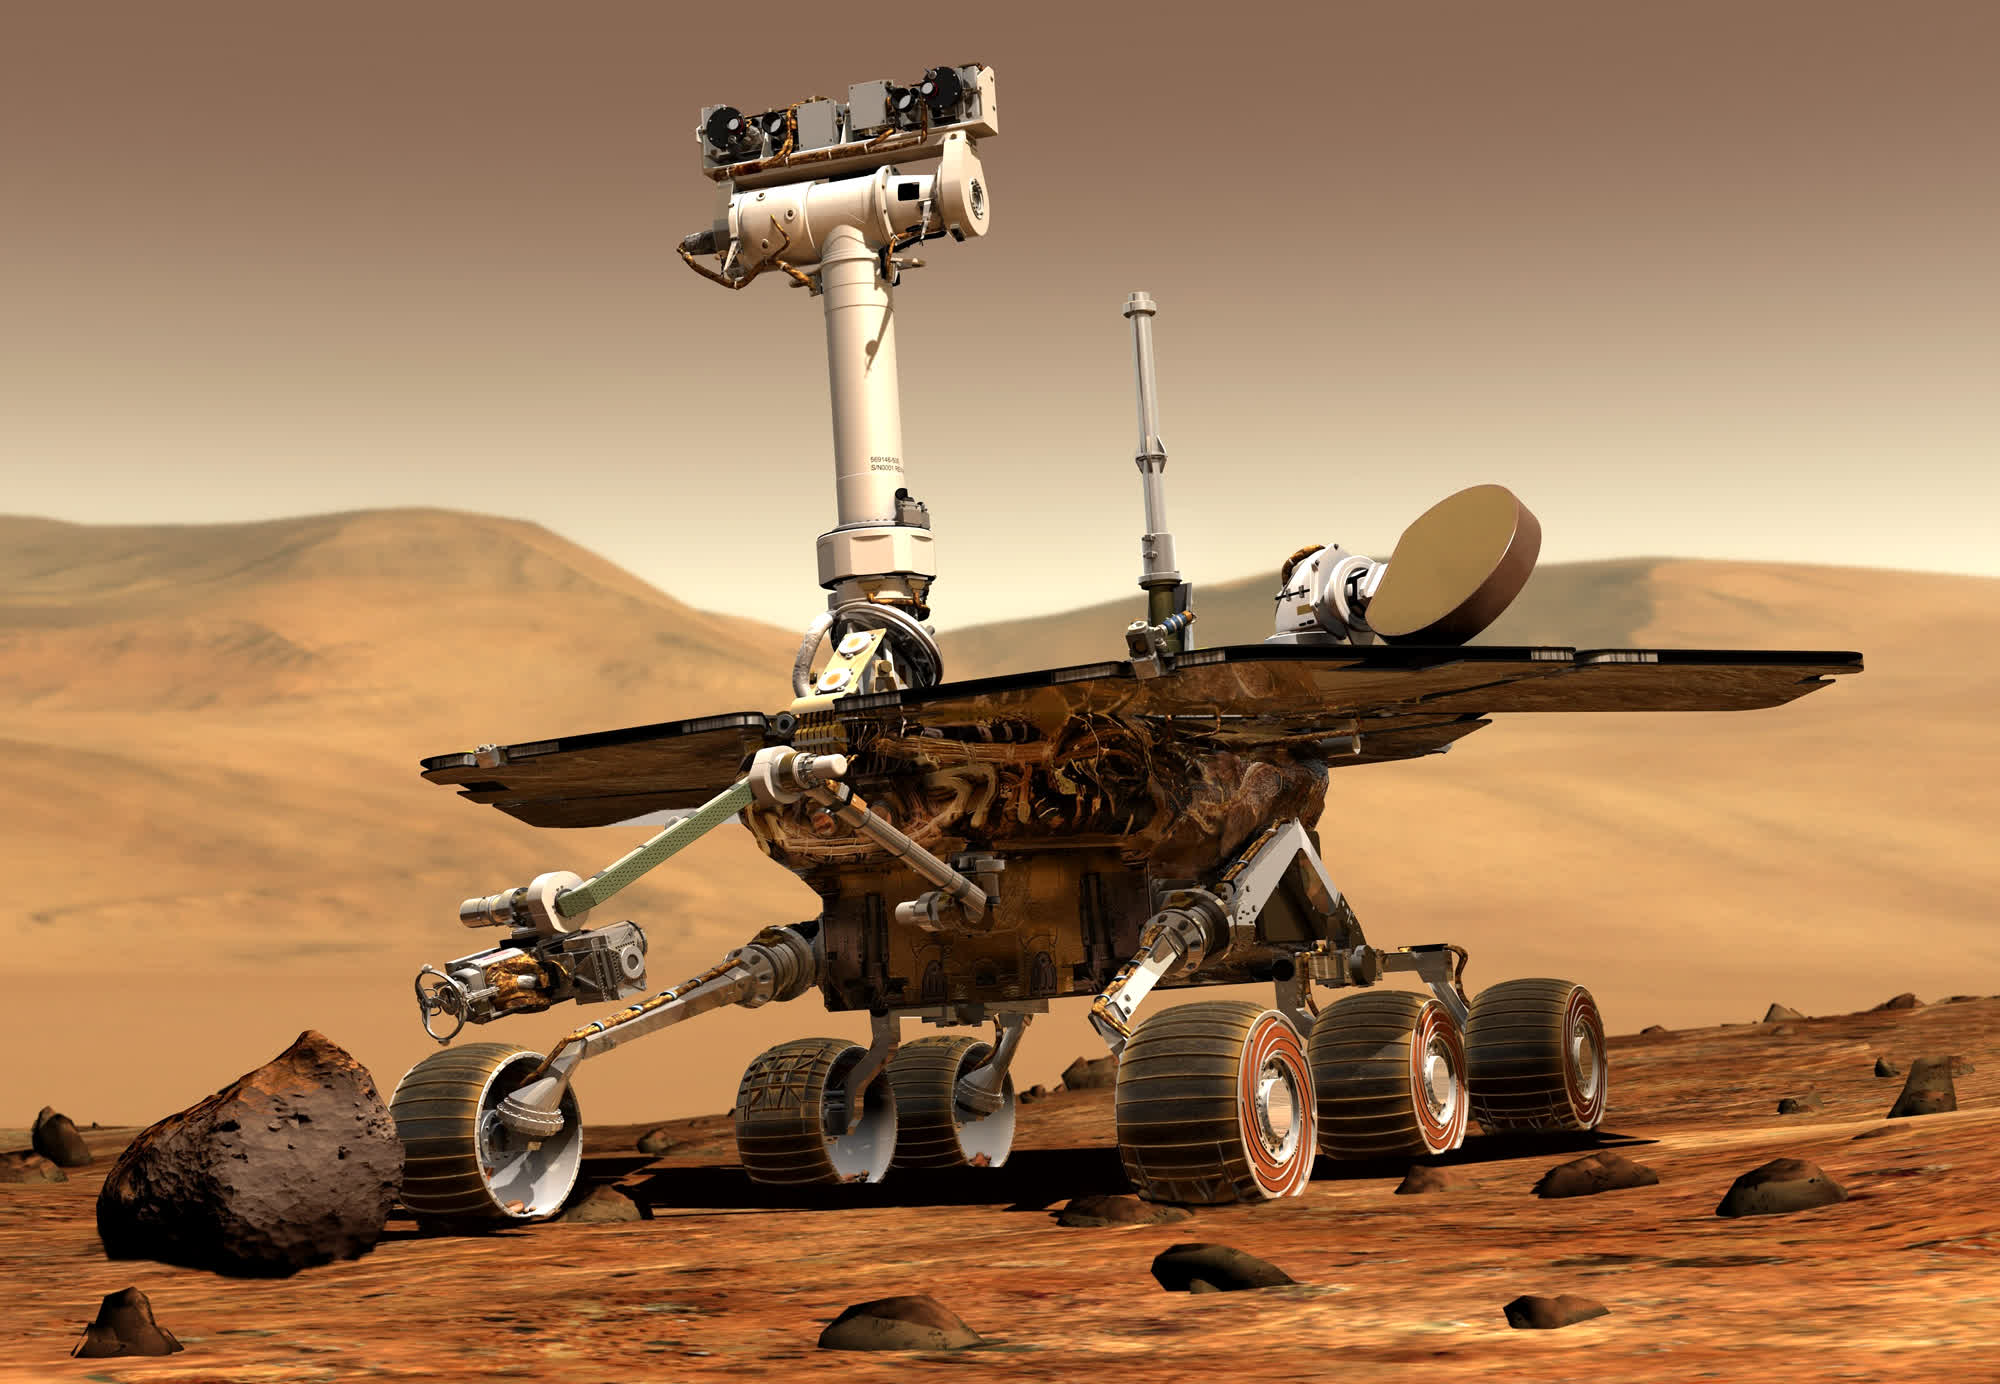 NASA's Perseverance rover finds diverse organic material in ancient Martian lake basin